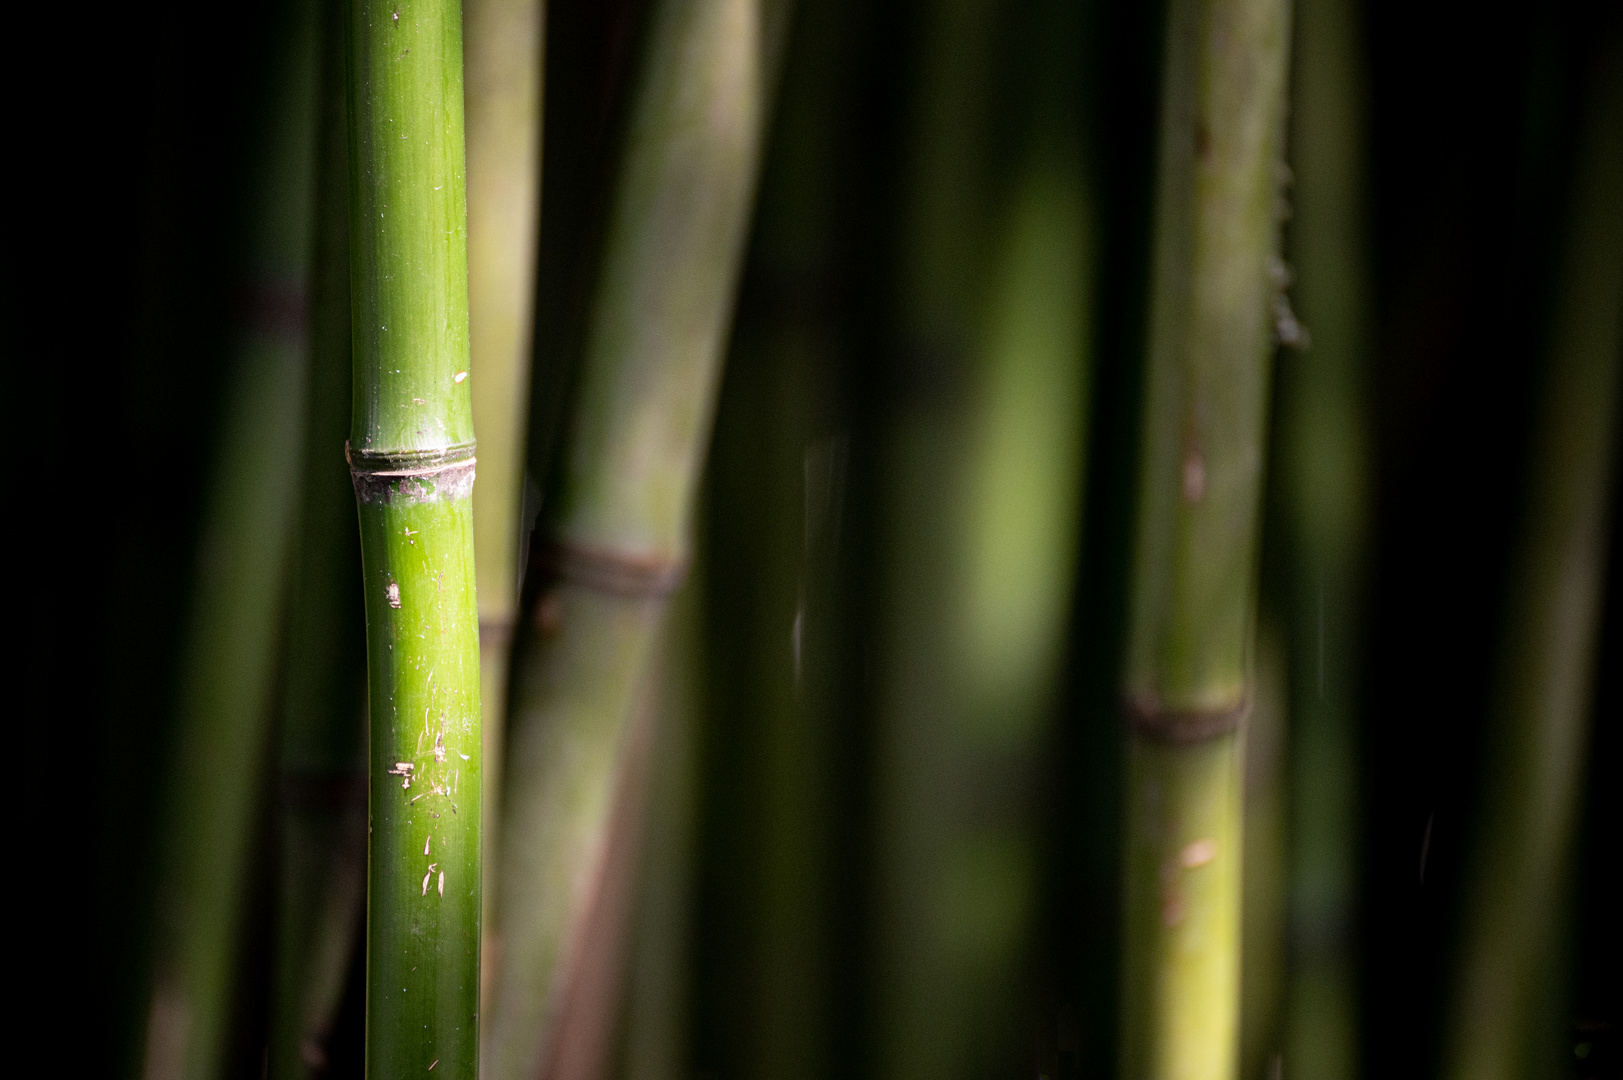 Bambus meditativ